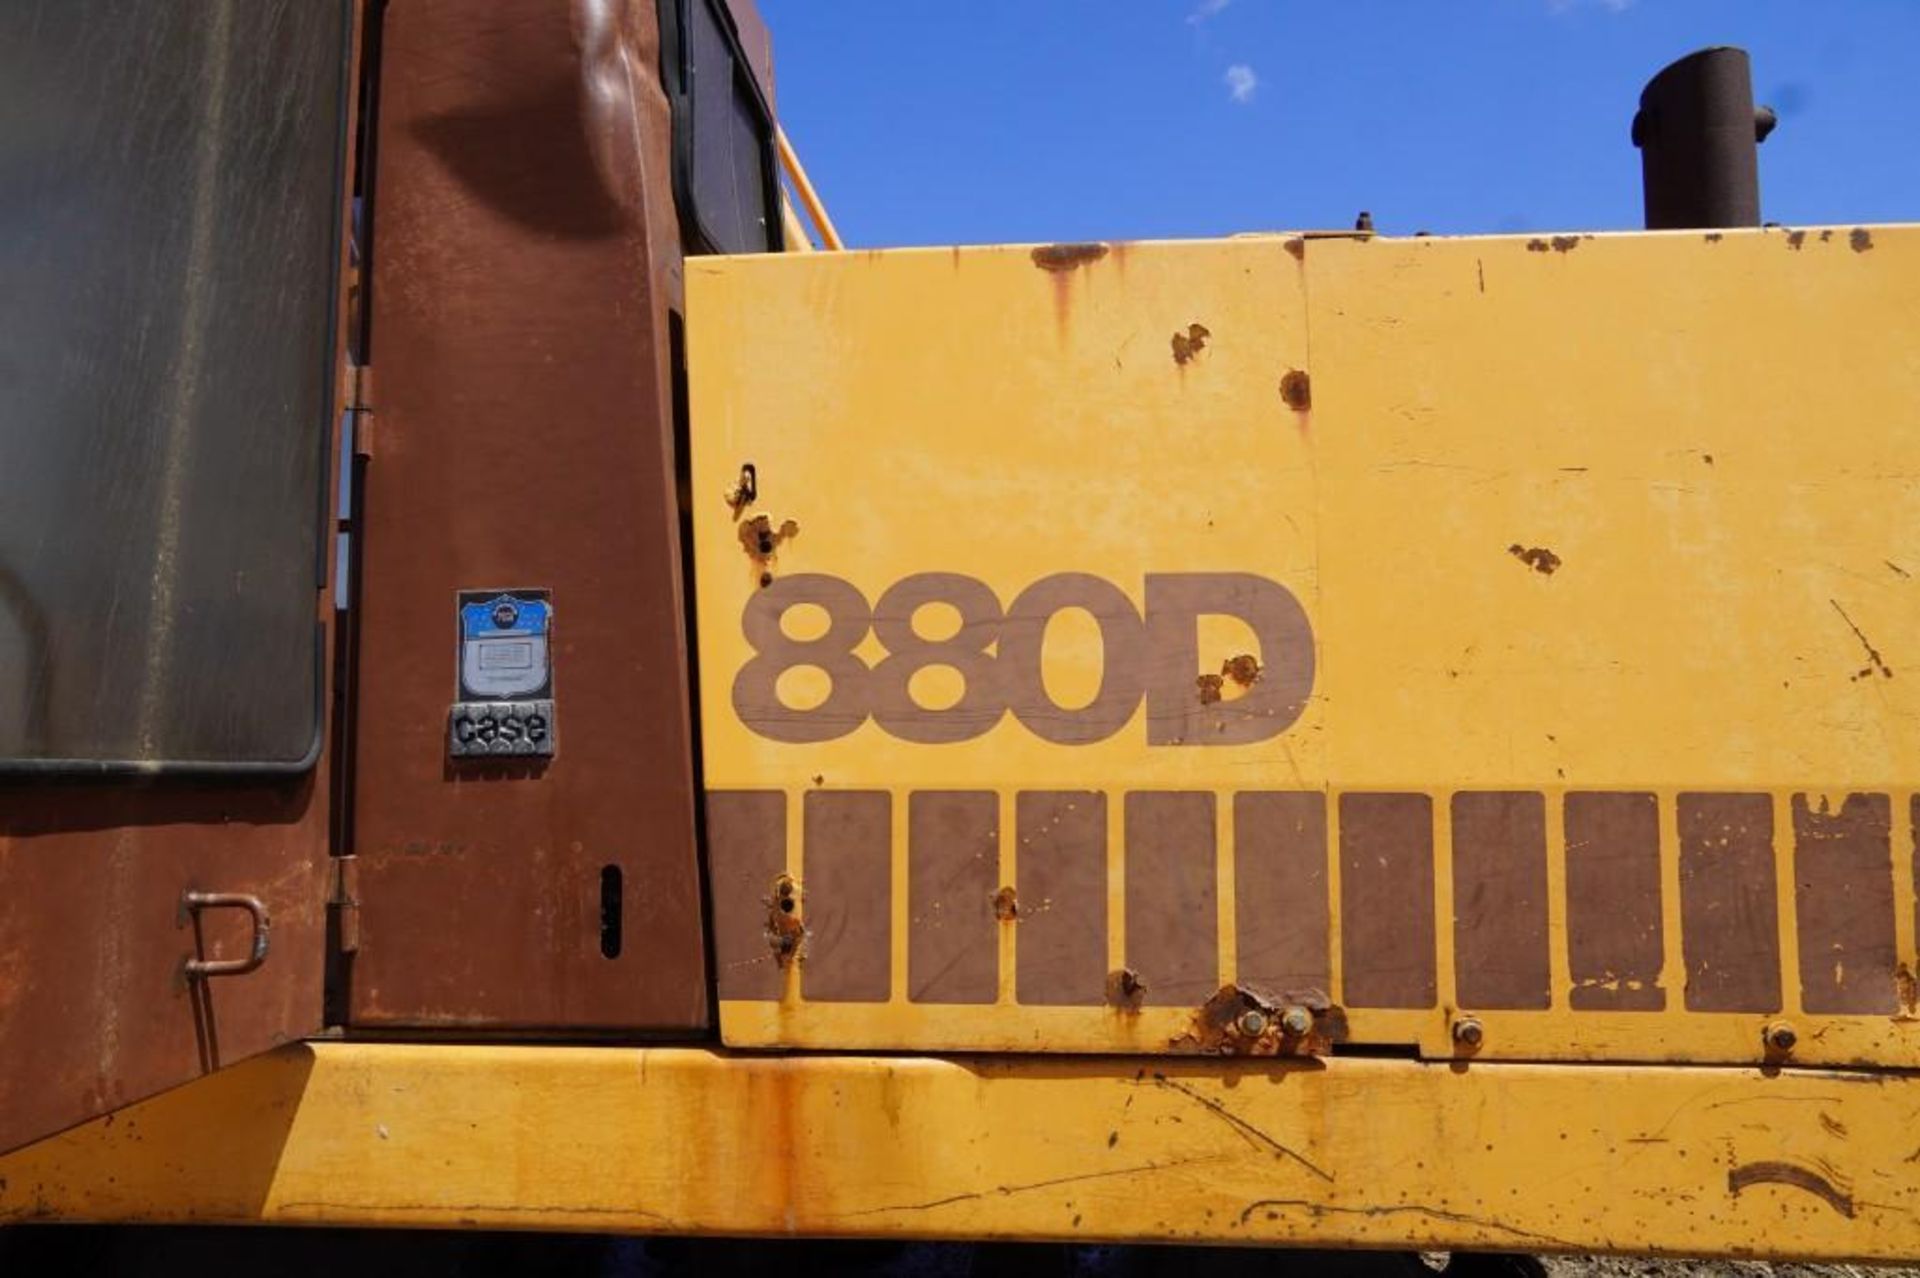 Case 880D Excavator - Bild 11 aus 53